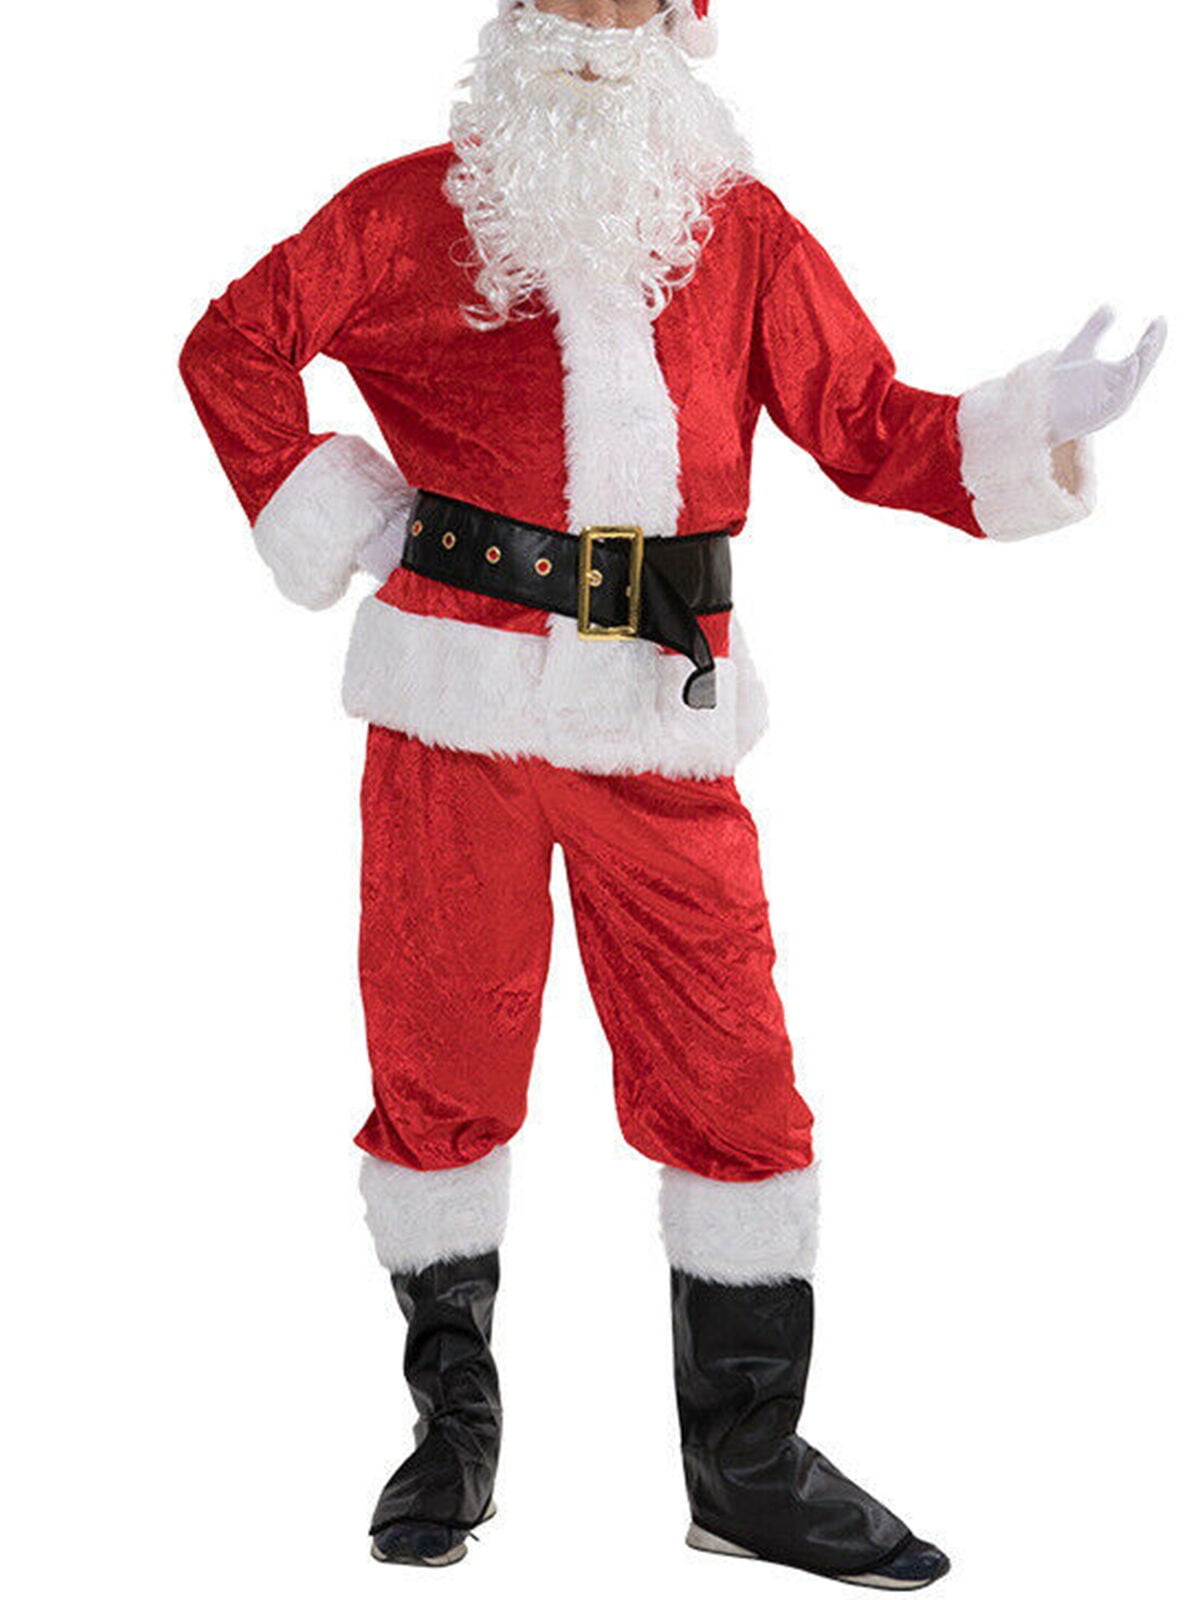 Santa Boot Covers Black With White Fur Trim Christmas Xmas Fancy Dress 